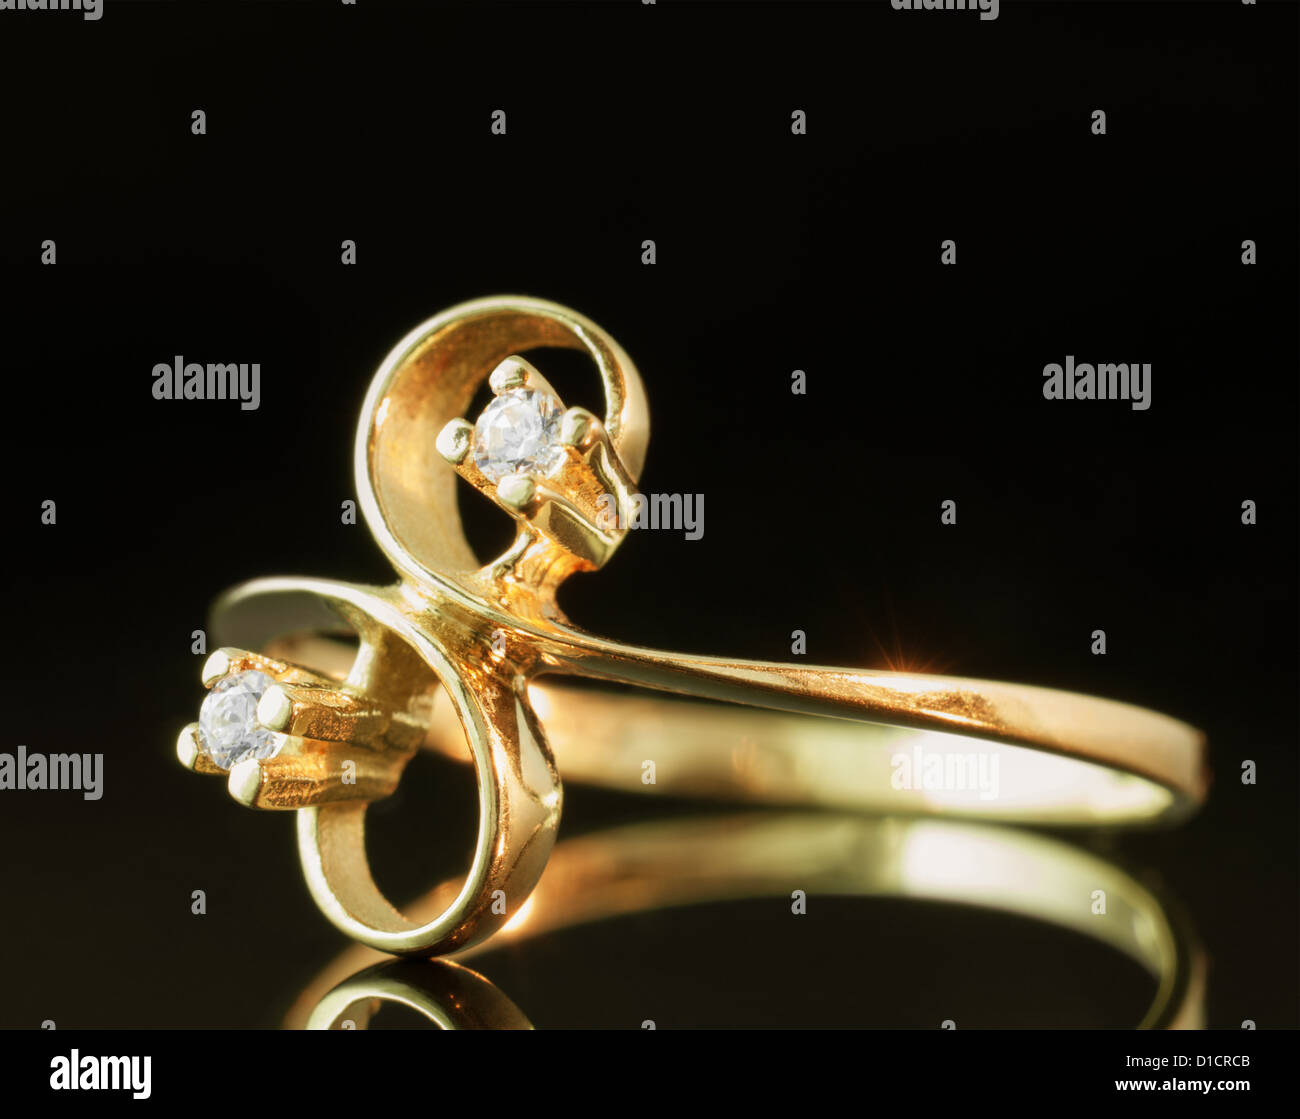 Gold ring on black background. Stock Photo